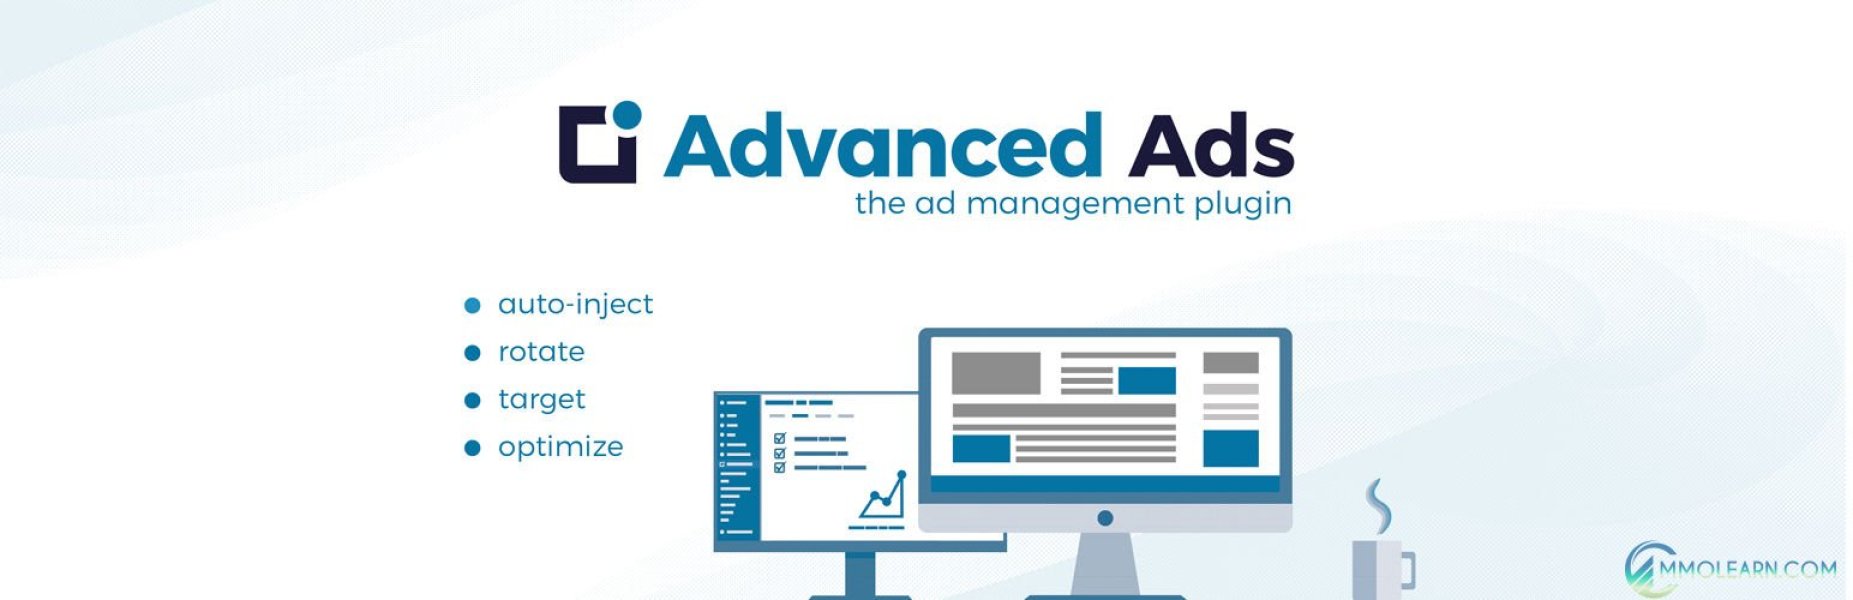 Advanced Ads Slider